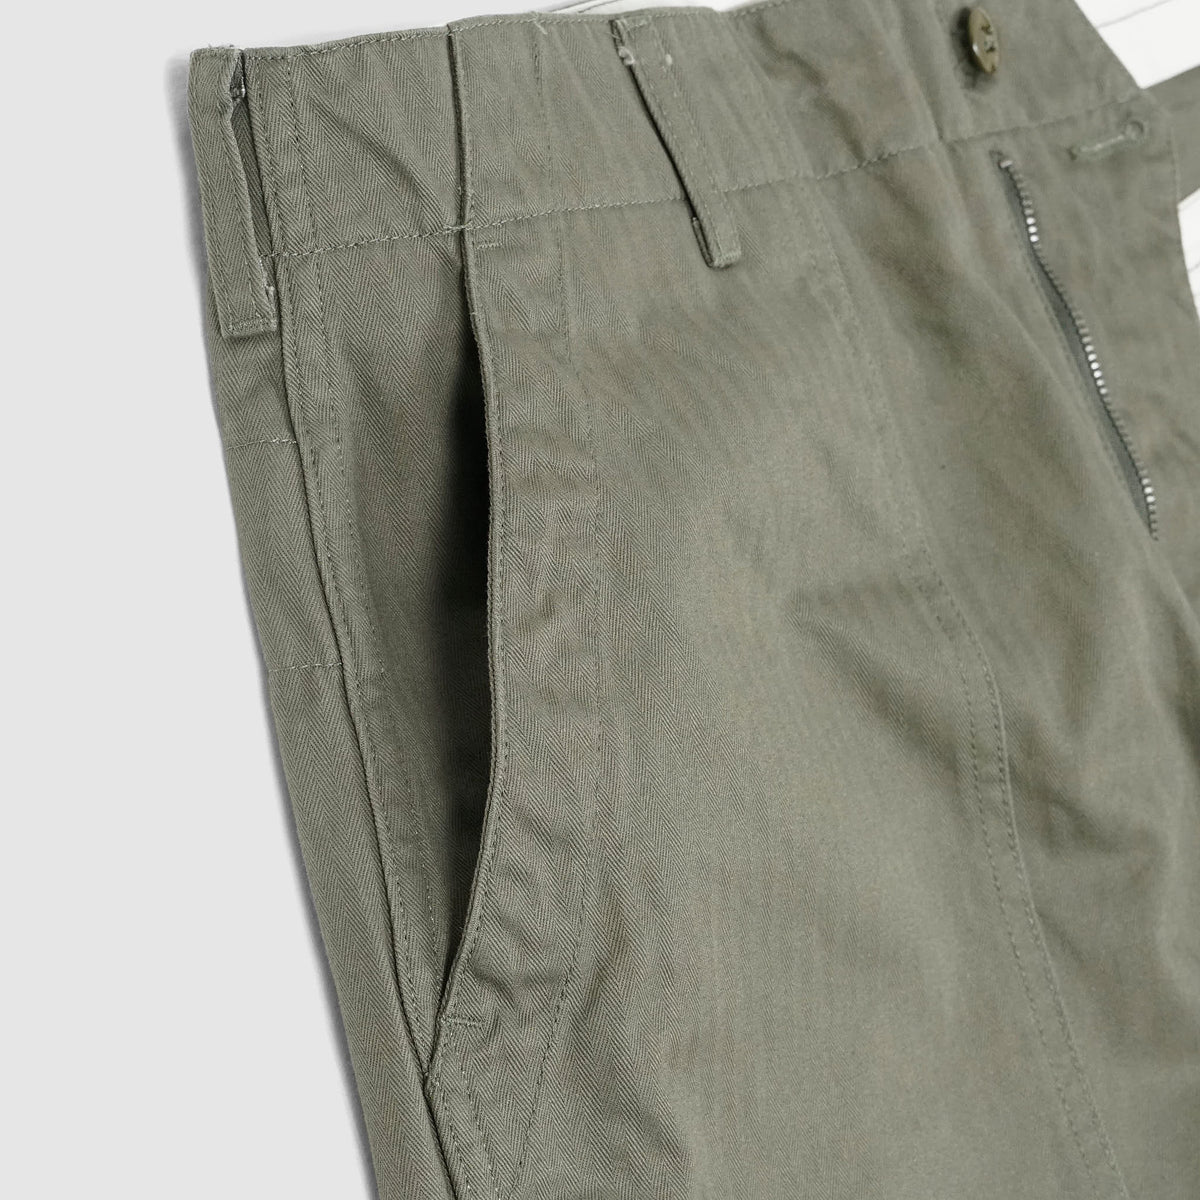 Engineered Garments Fatigue Pants